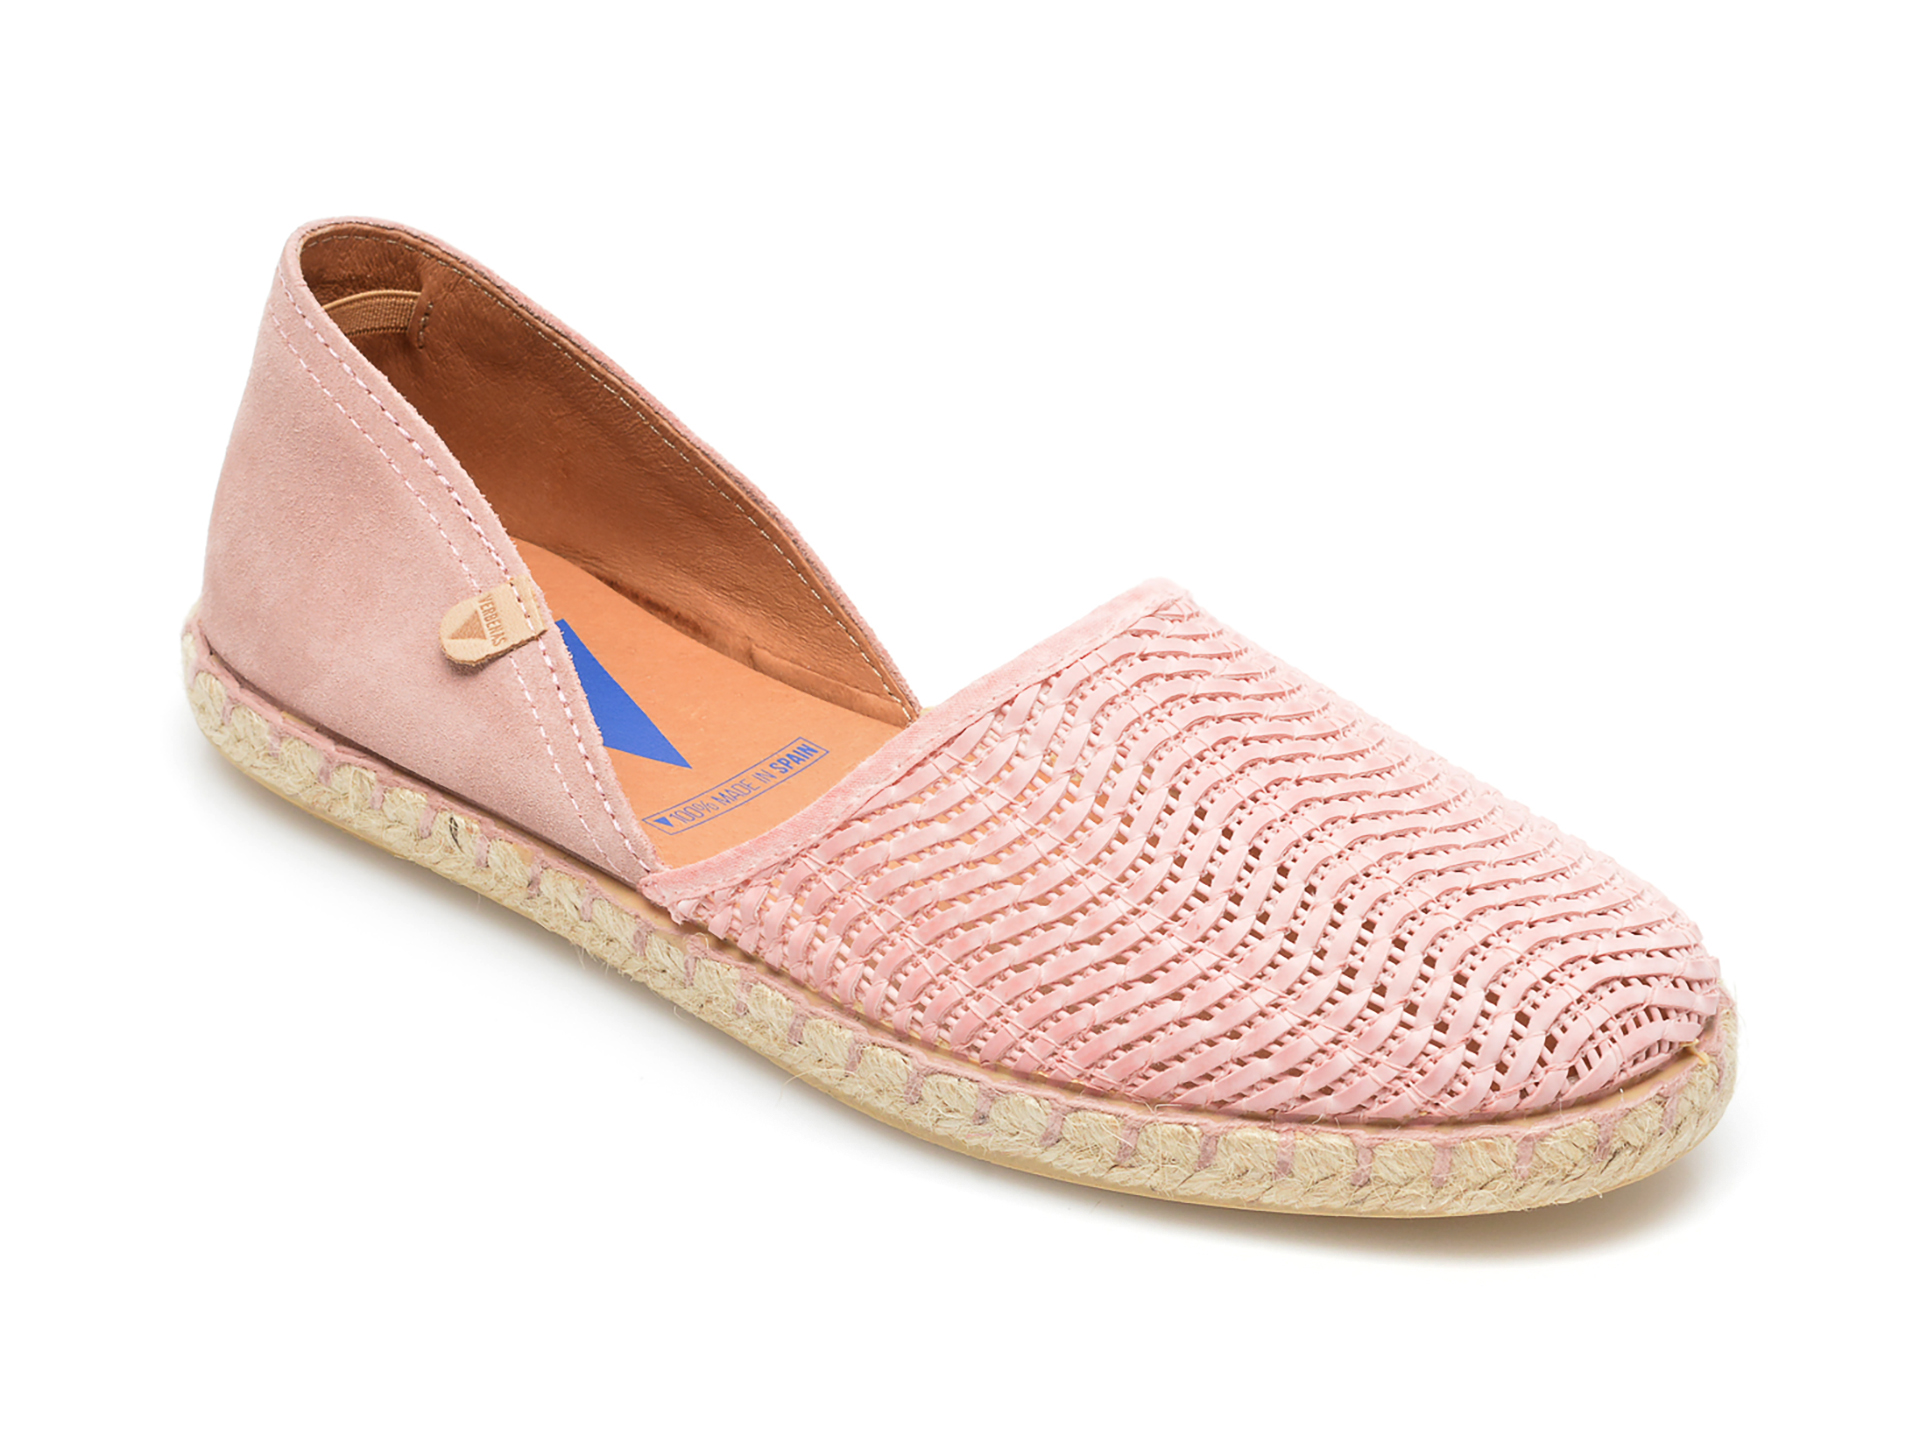 Pantofi VERBENAS roz, CRM0102, din material textil si piele intoarsa La Compania Natural